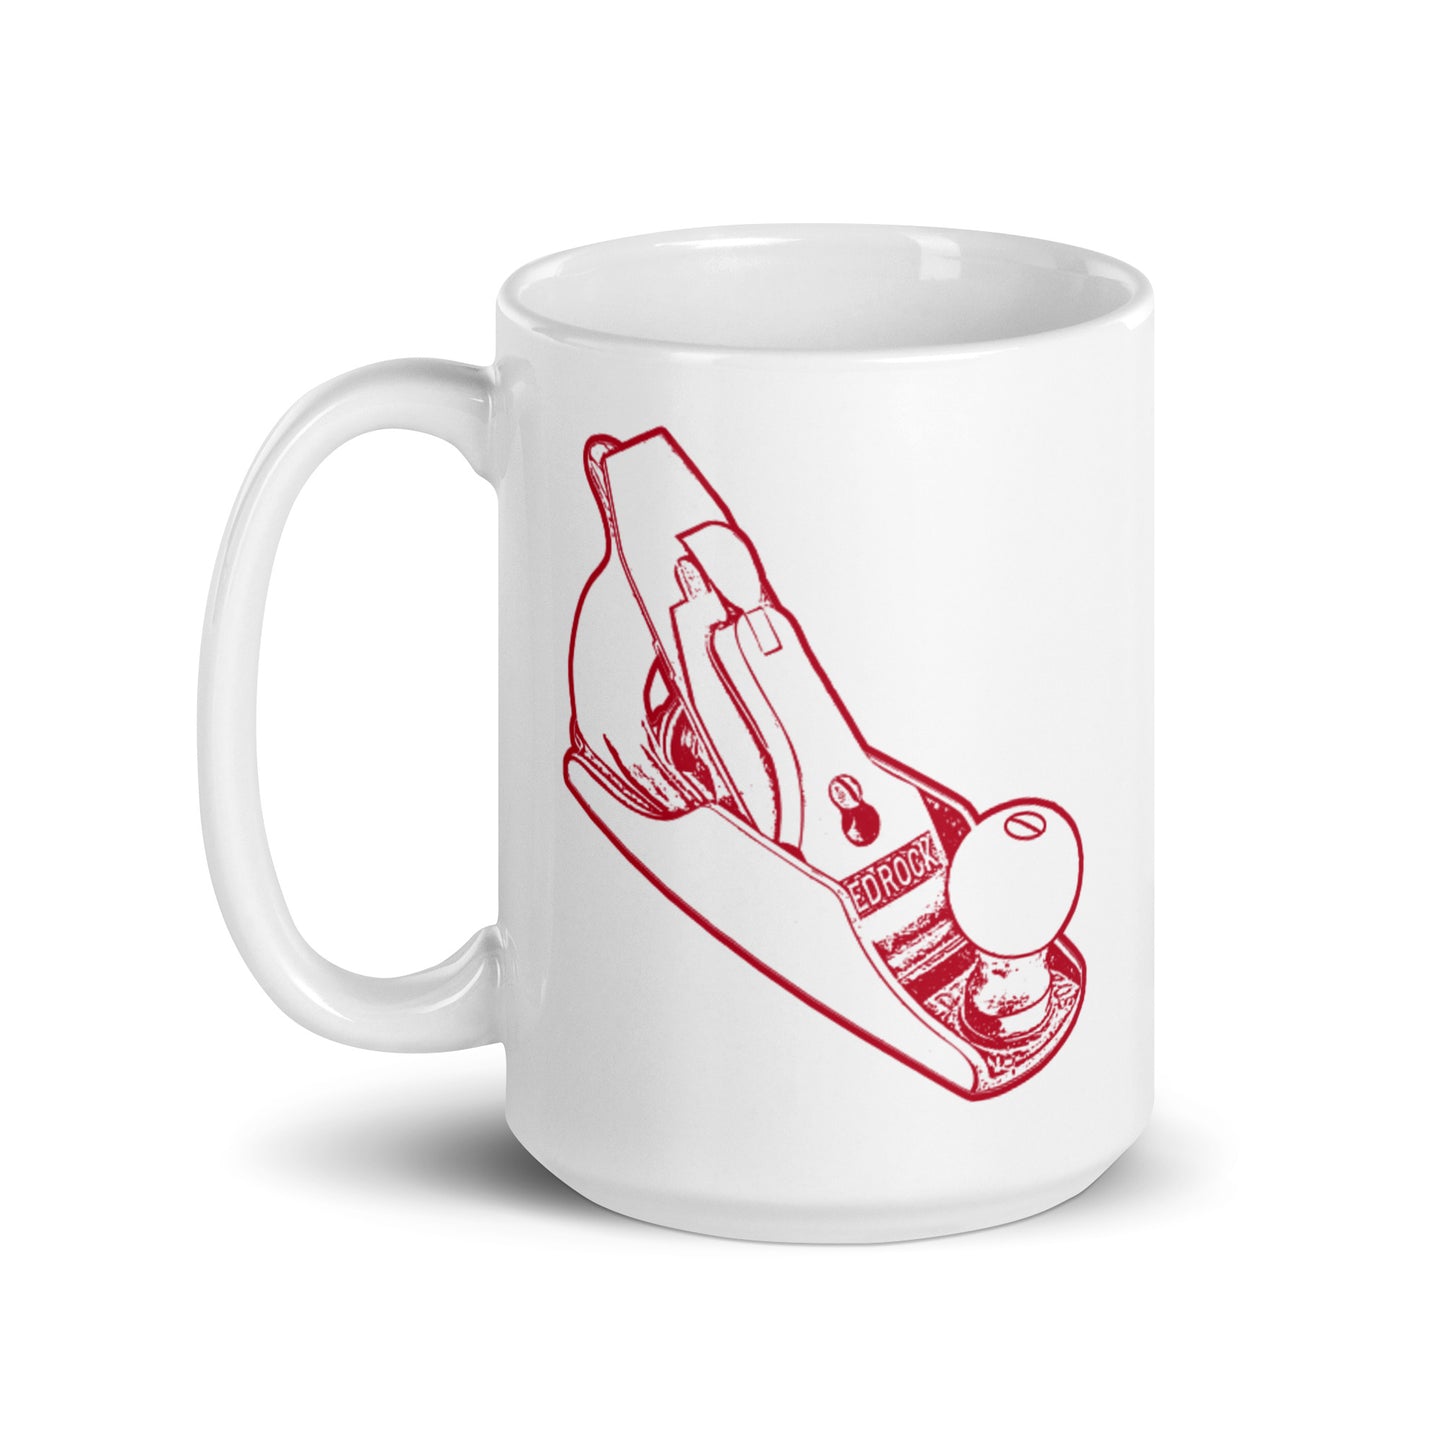 Bedrock Handplane Woodworking Gift Mug (Red)